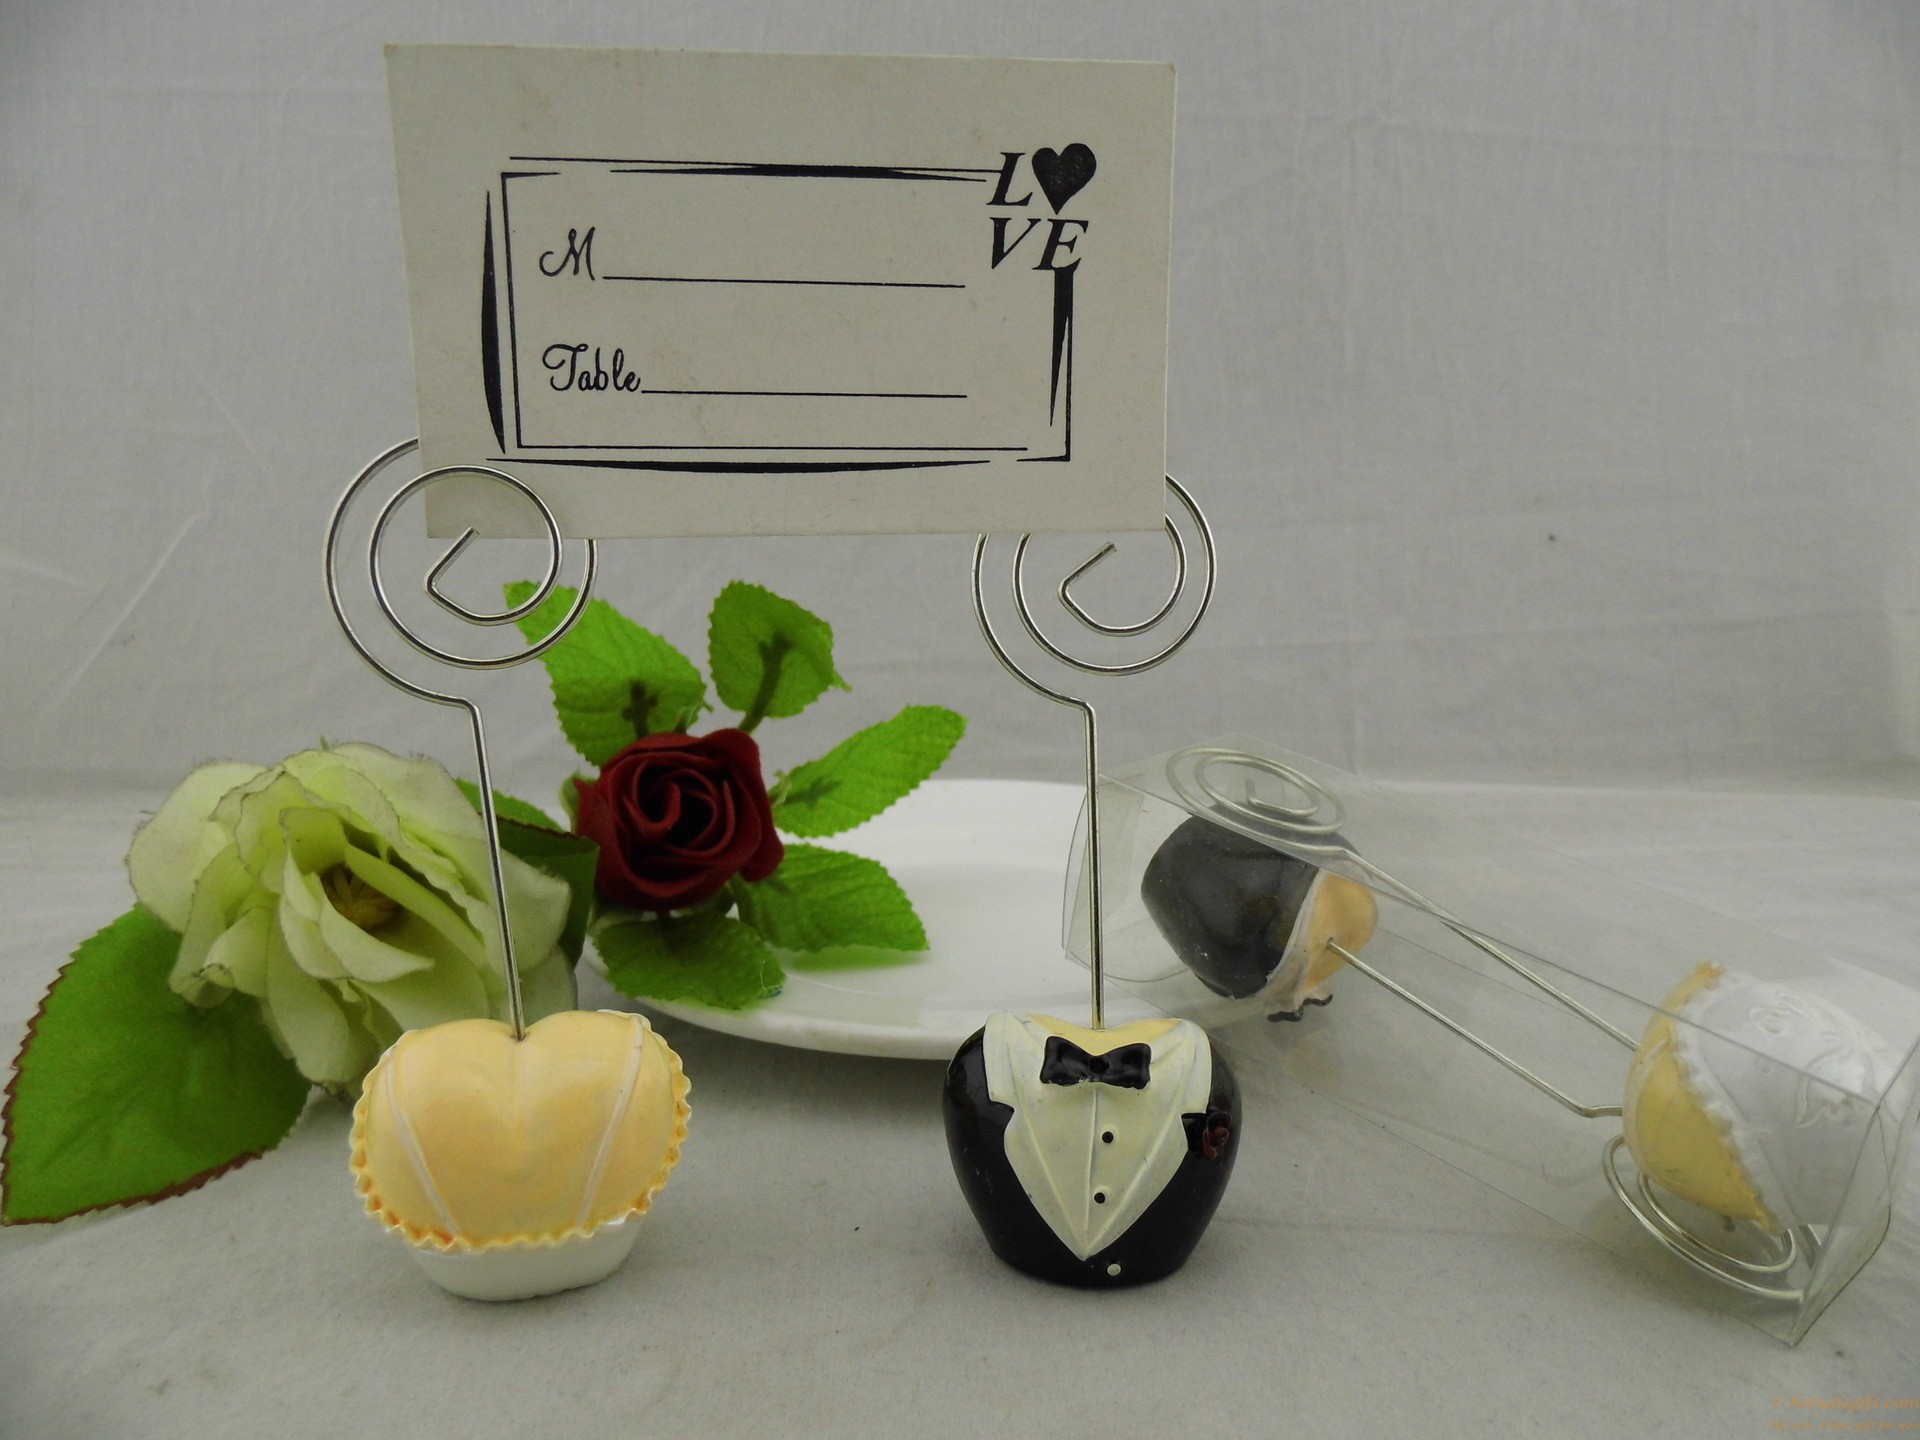 hotsalegift resin bride groom place card holder decoration wedding favors